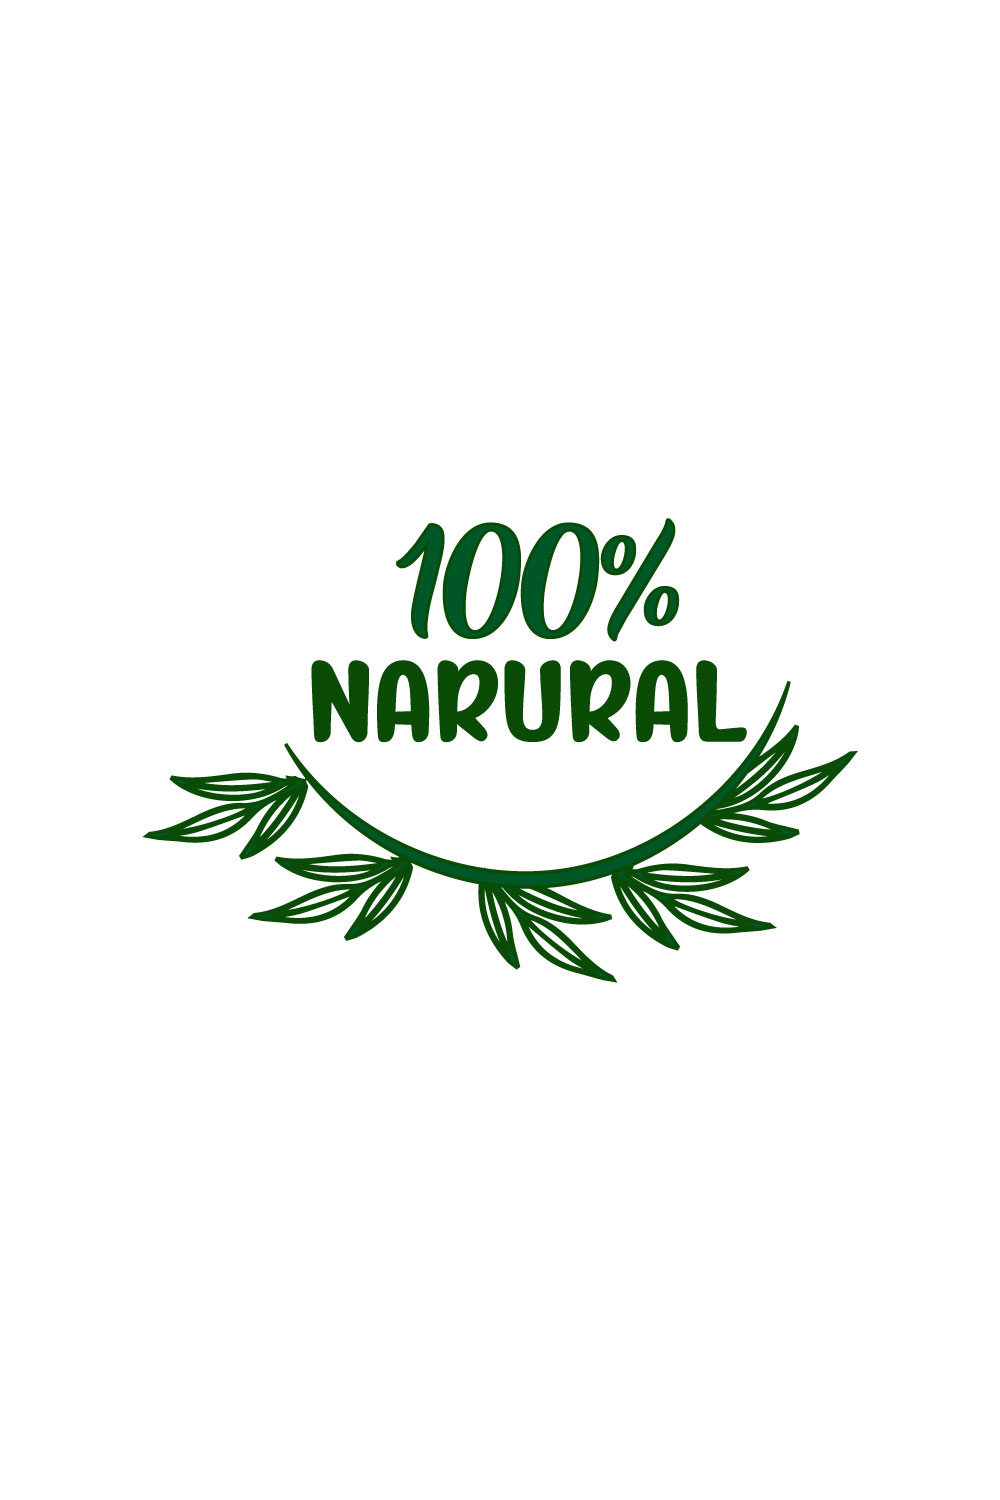 Free GreenNatural Logo pinterest preview image.